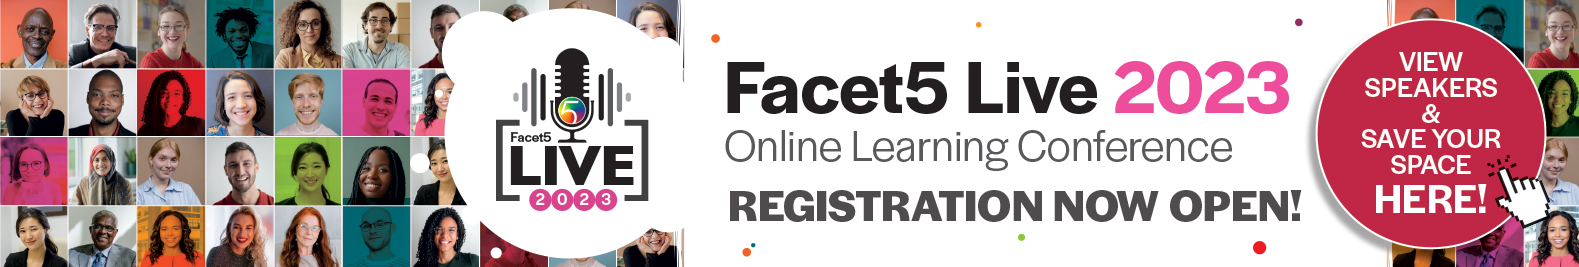 Facte5-website-registration-open.jpg